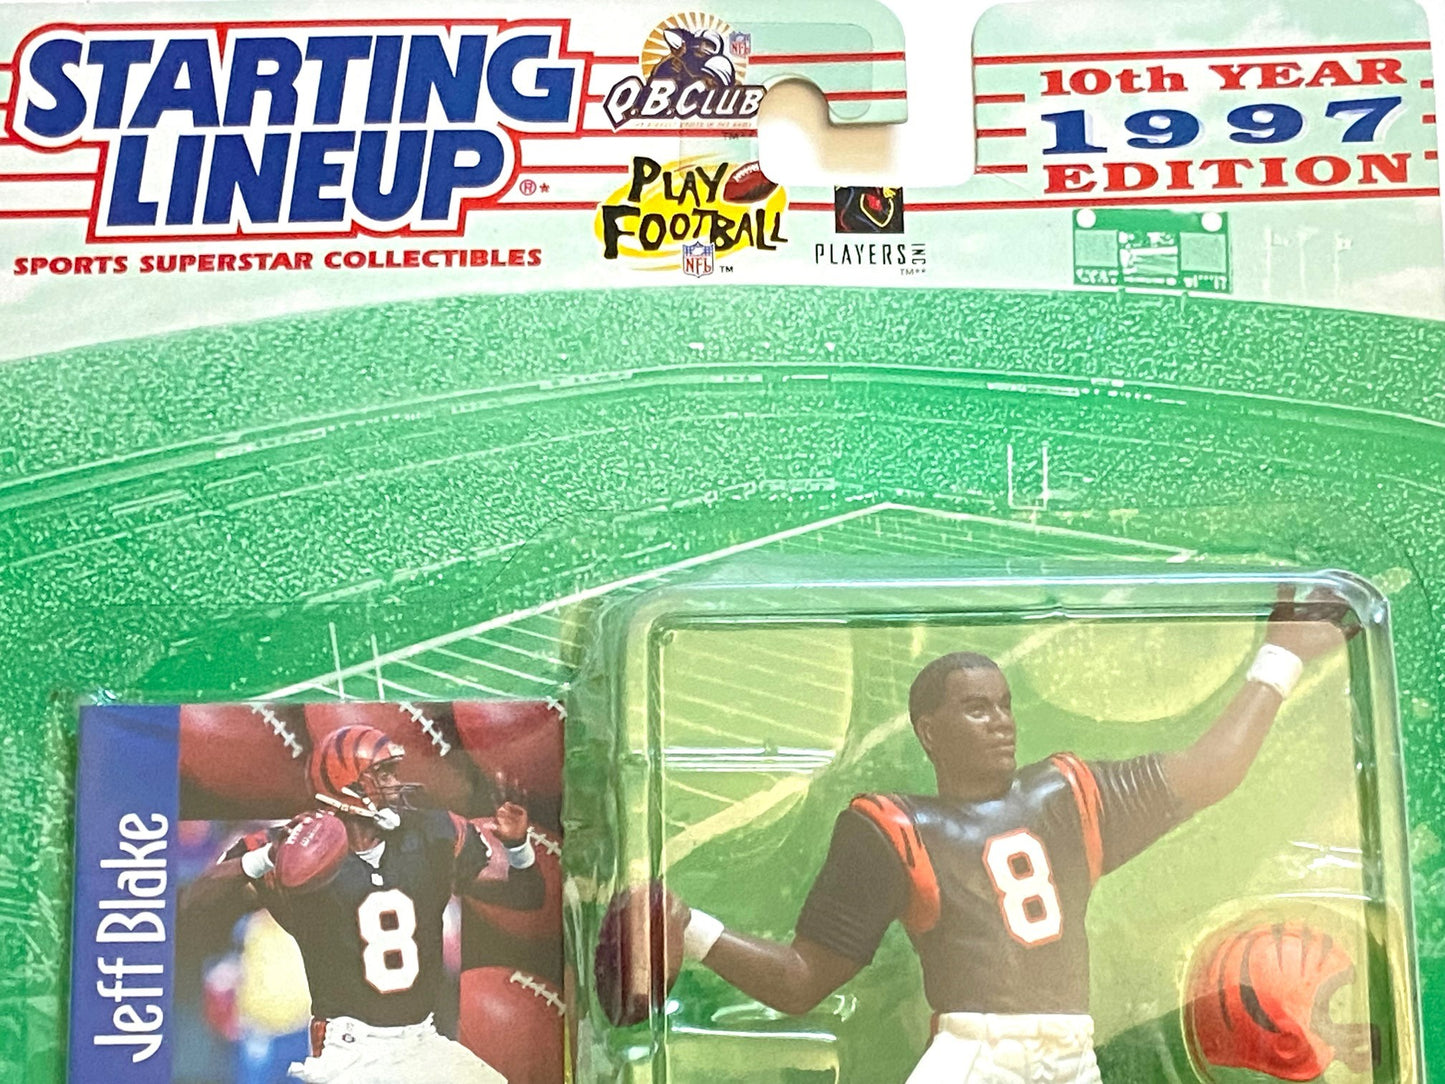 Jeff Blake 1997 NFL Cincinnati Bengals Starting Lineup Figurine by Kenner